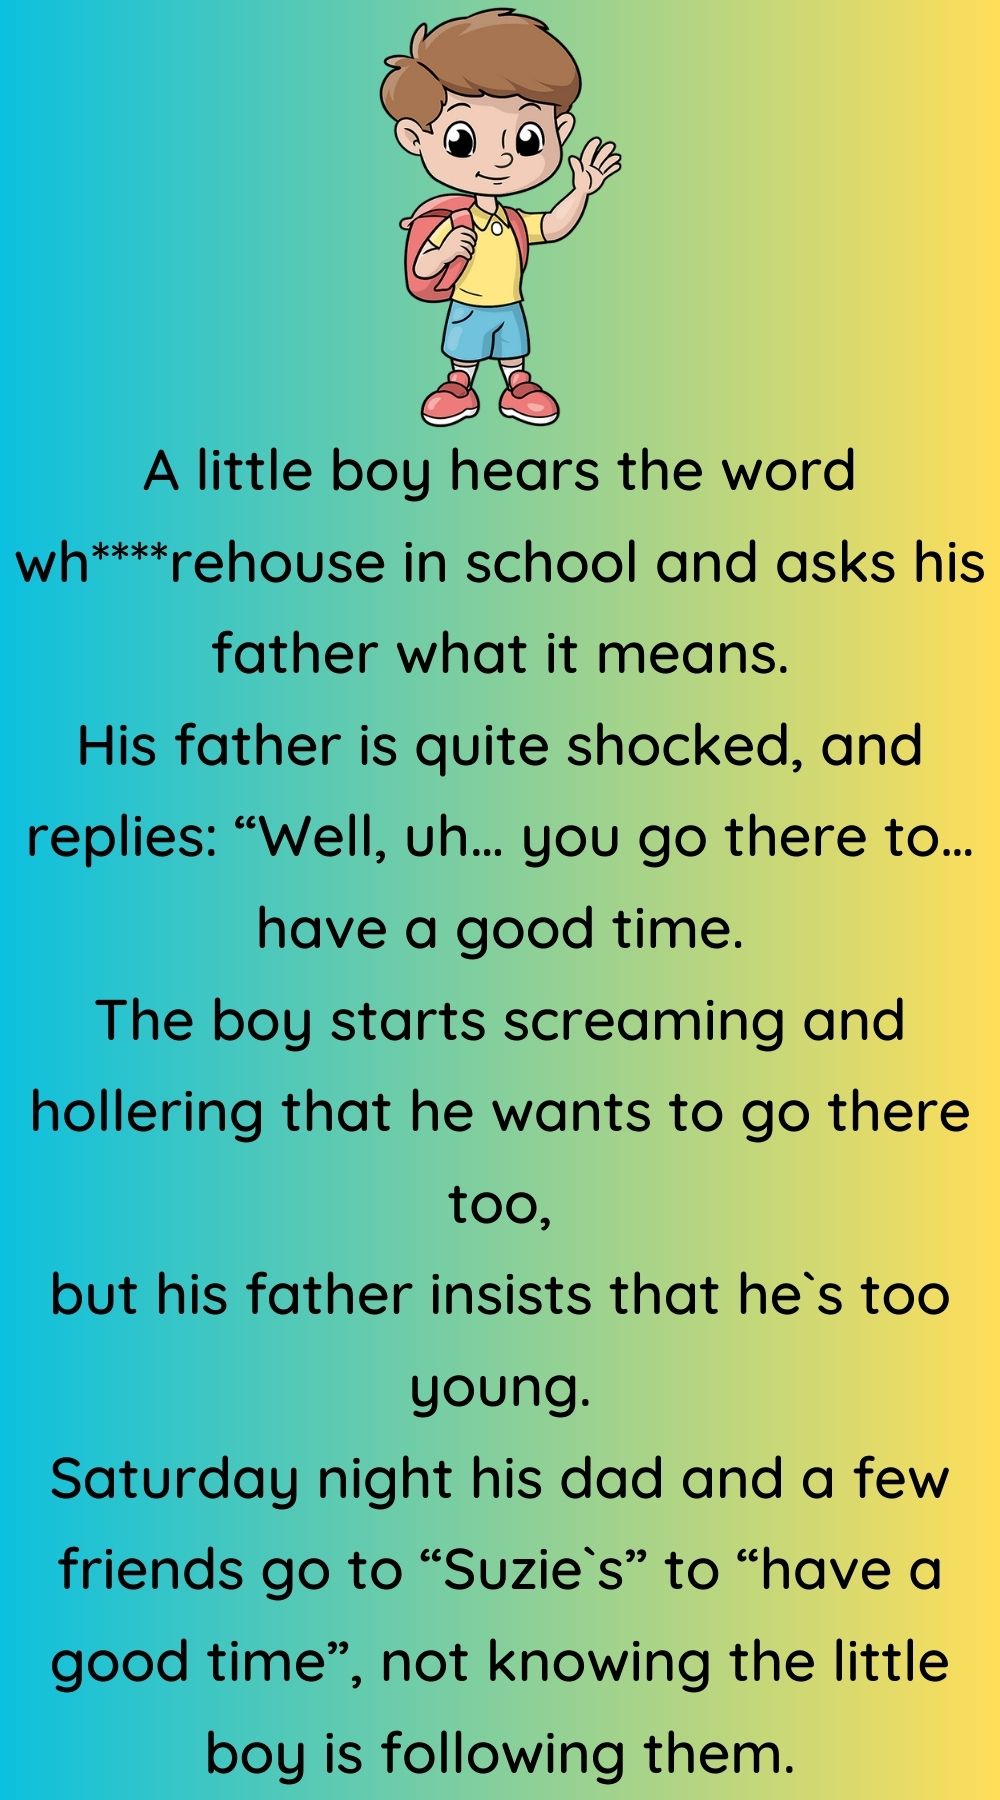 A little boy hears the word 